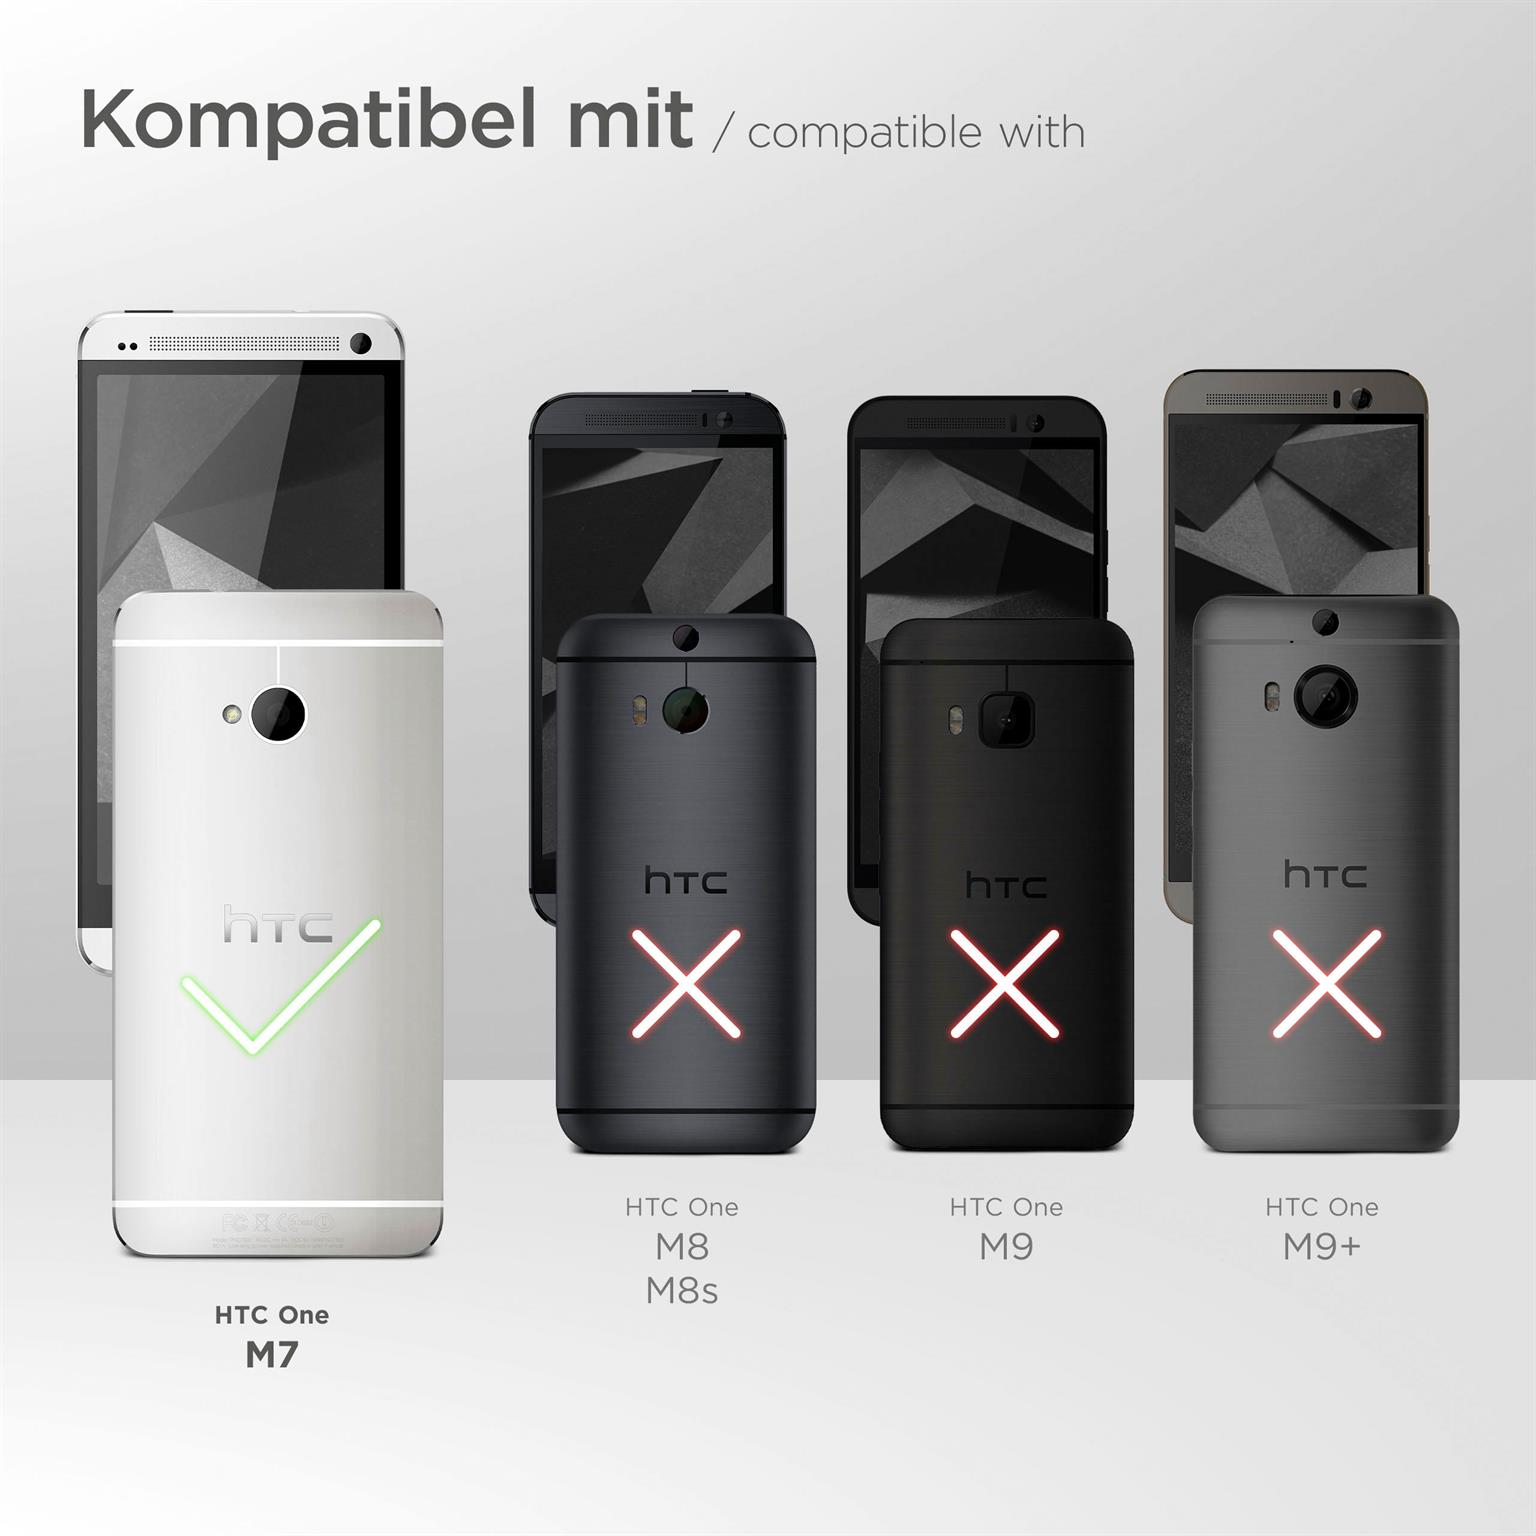 MOEX Flip Case, Flip M7, Canyon-Orange Cover, HTC, One